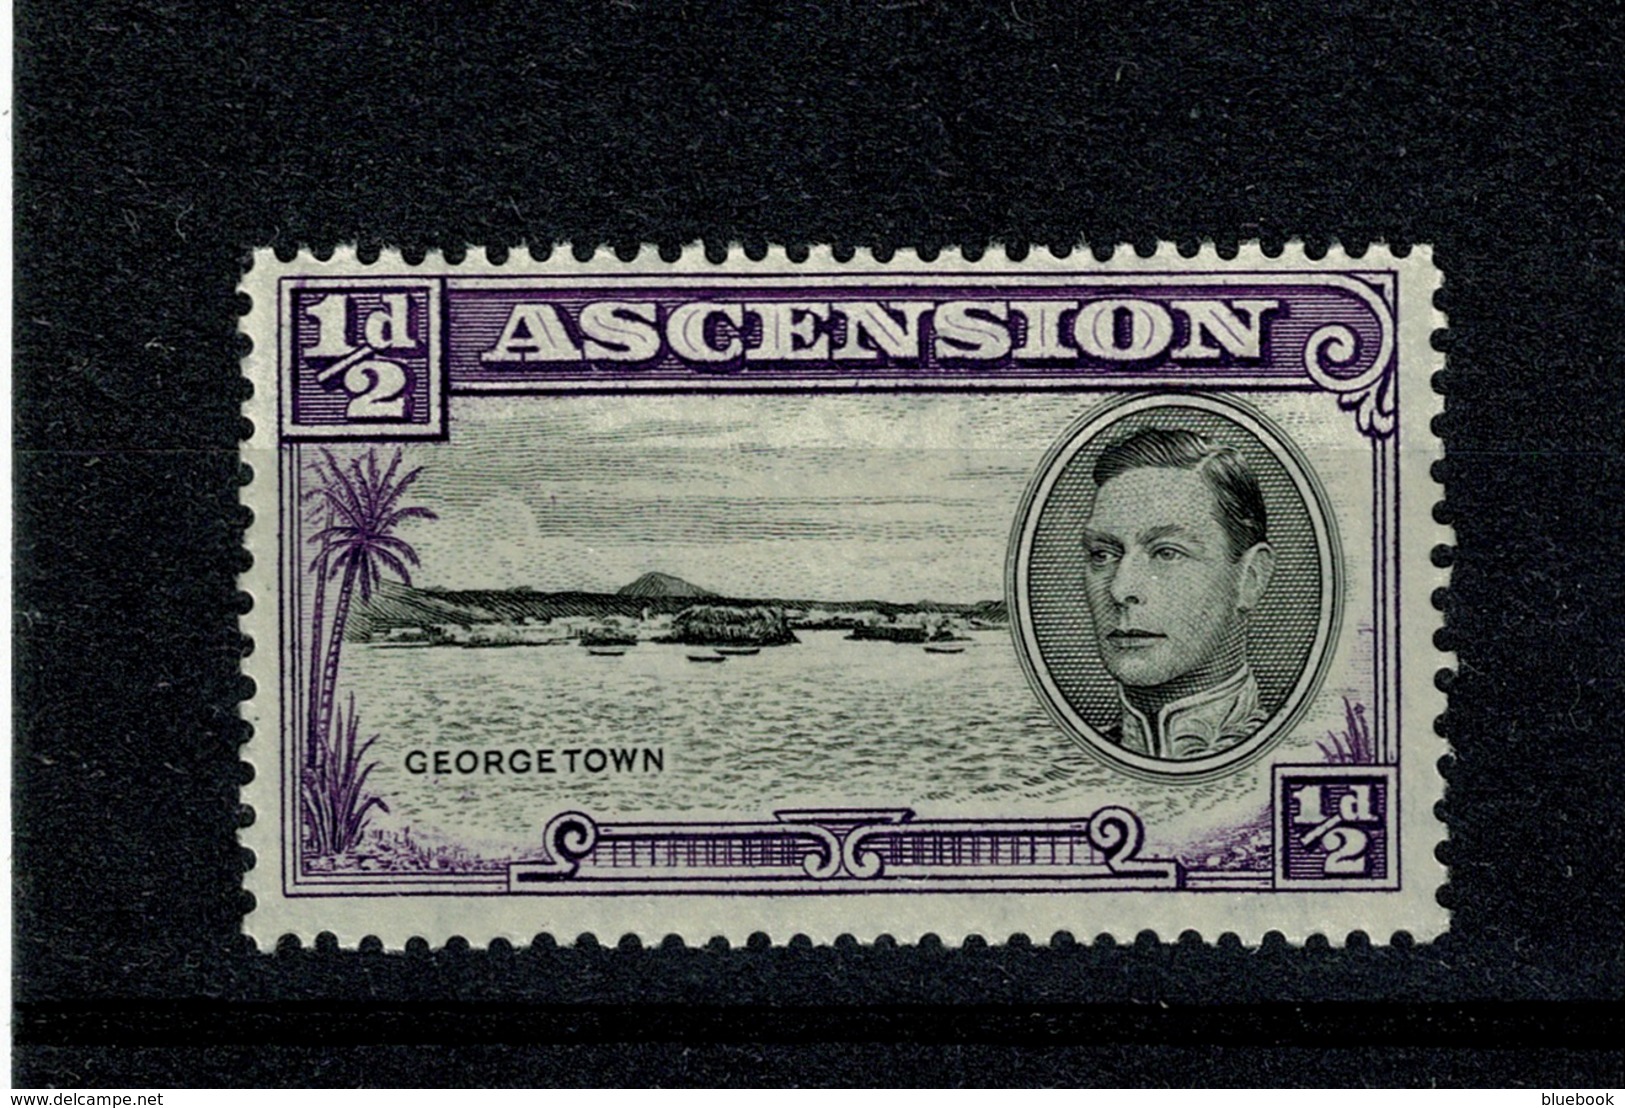 Ref 1322 - Ascension Island 1938 - 1/2d SG 38ba - Elongated "E" Variety - Mint Stamp - Ascension